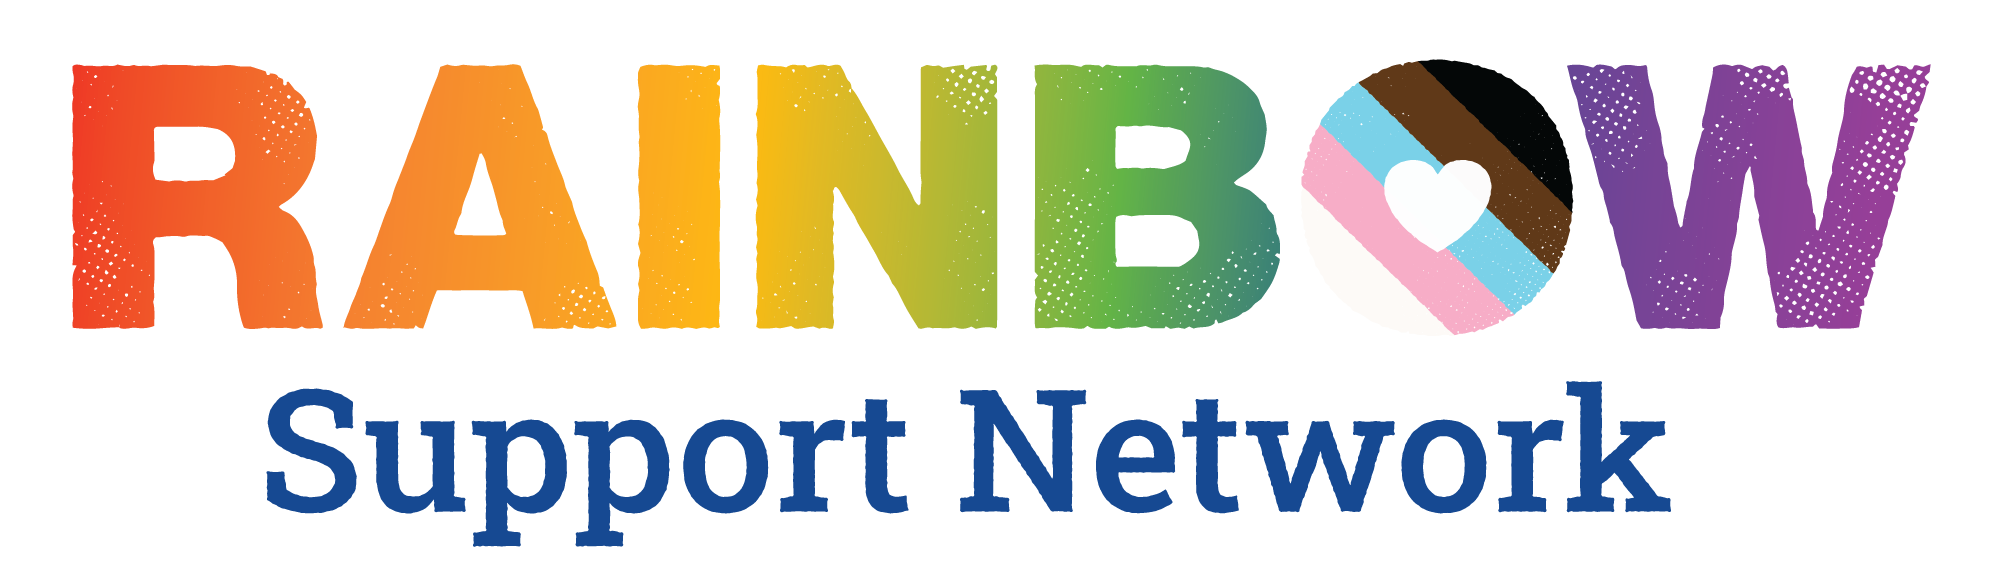 Rainbow Support Network logo